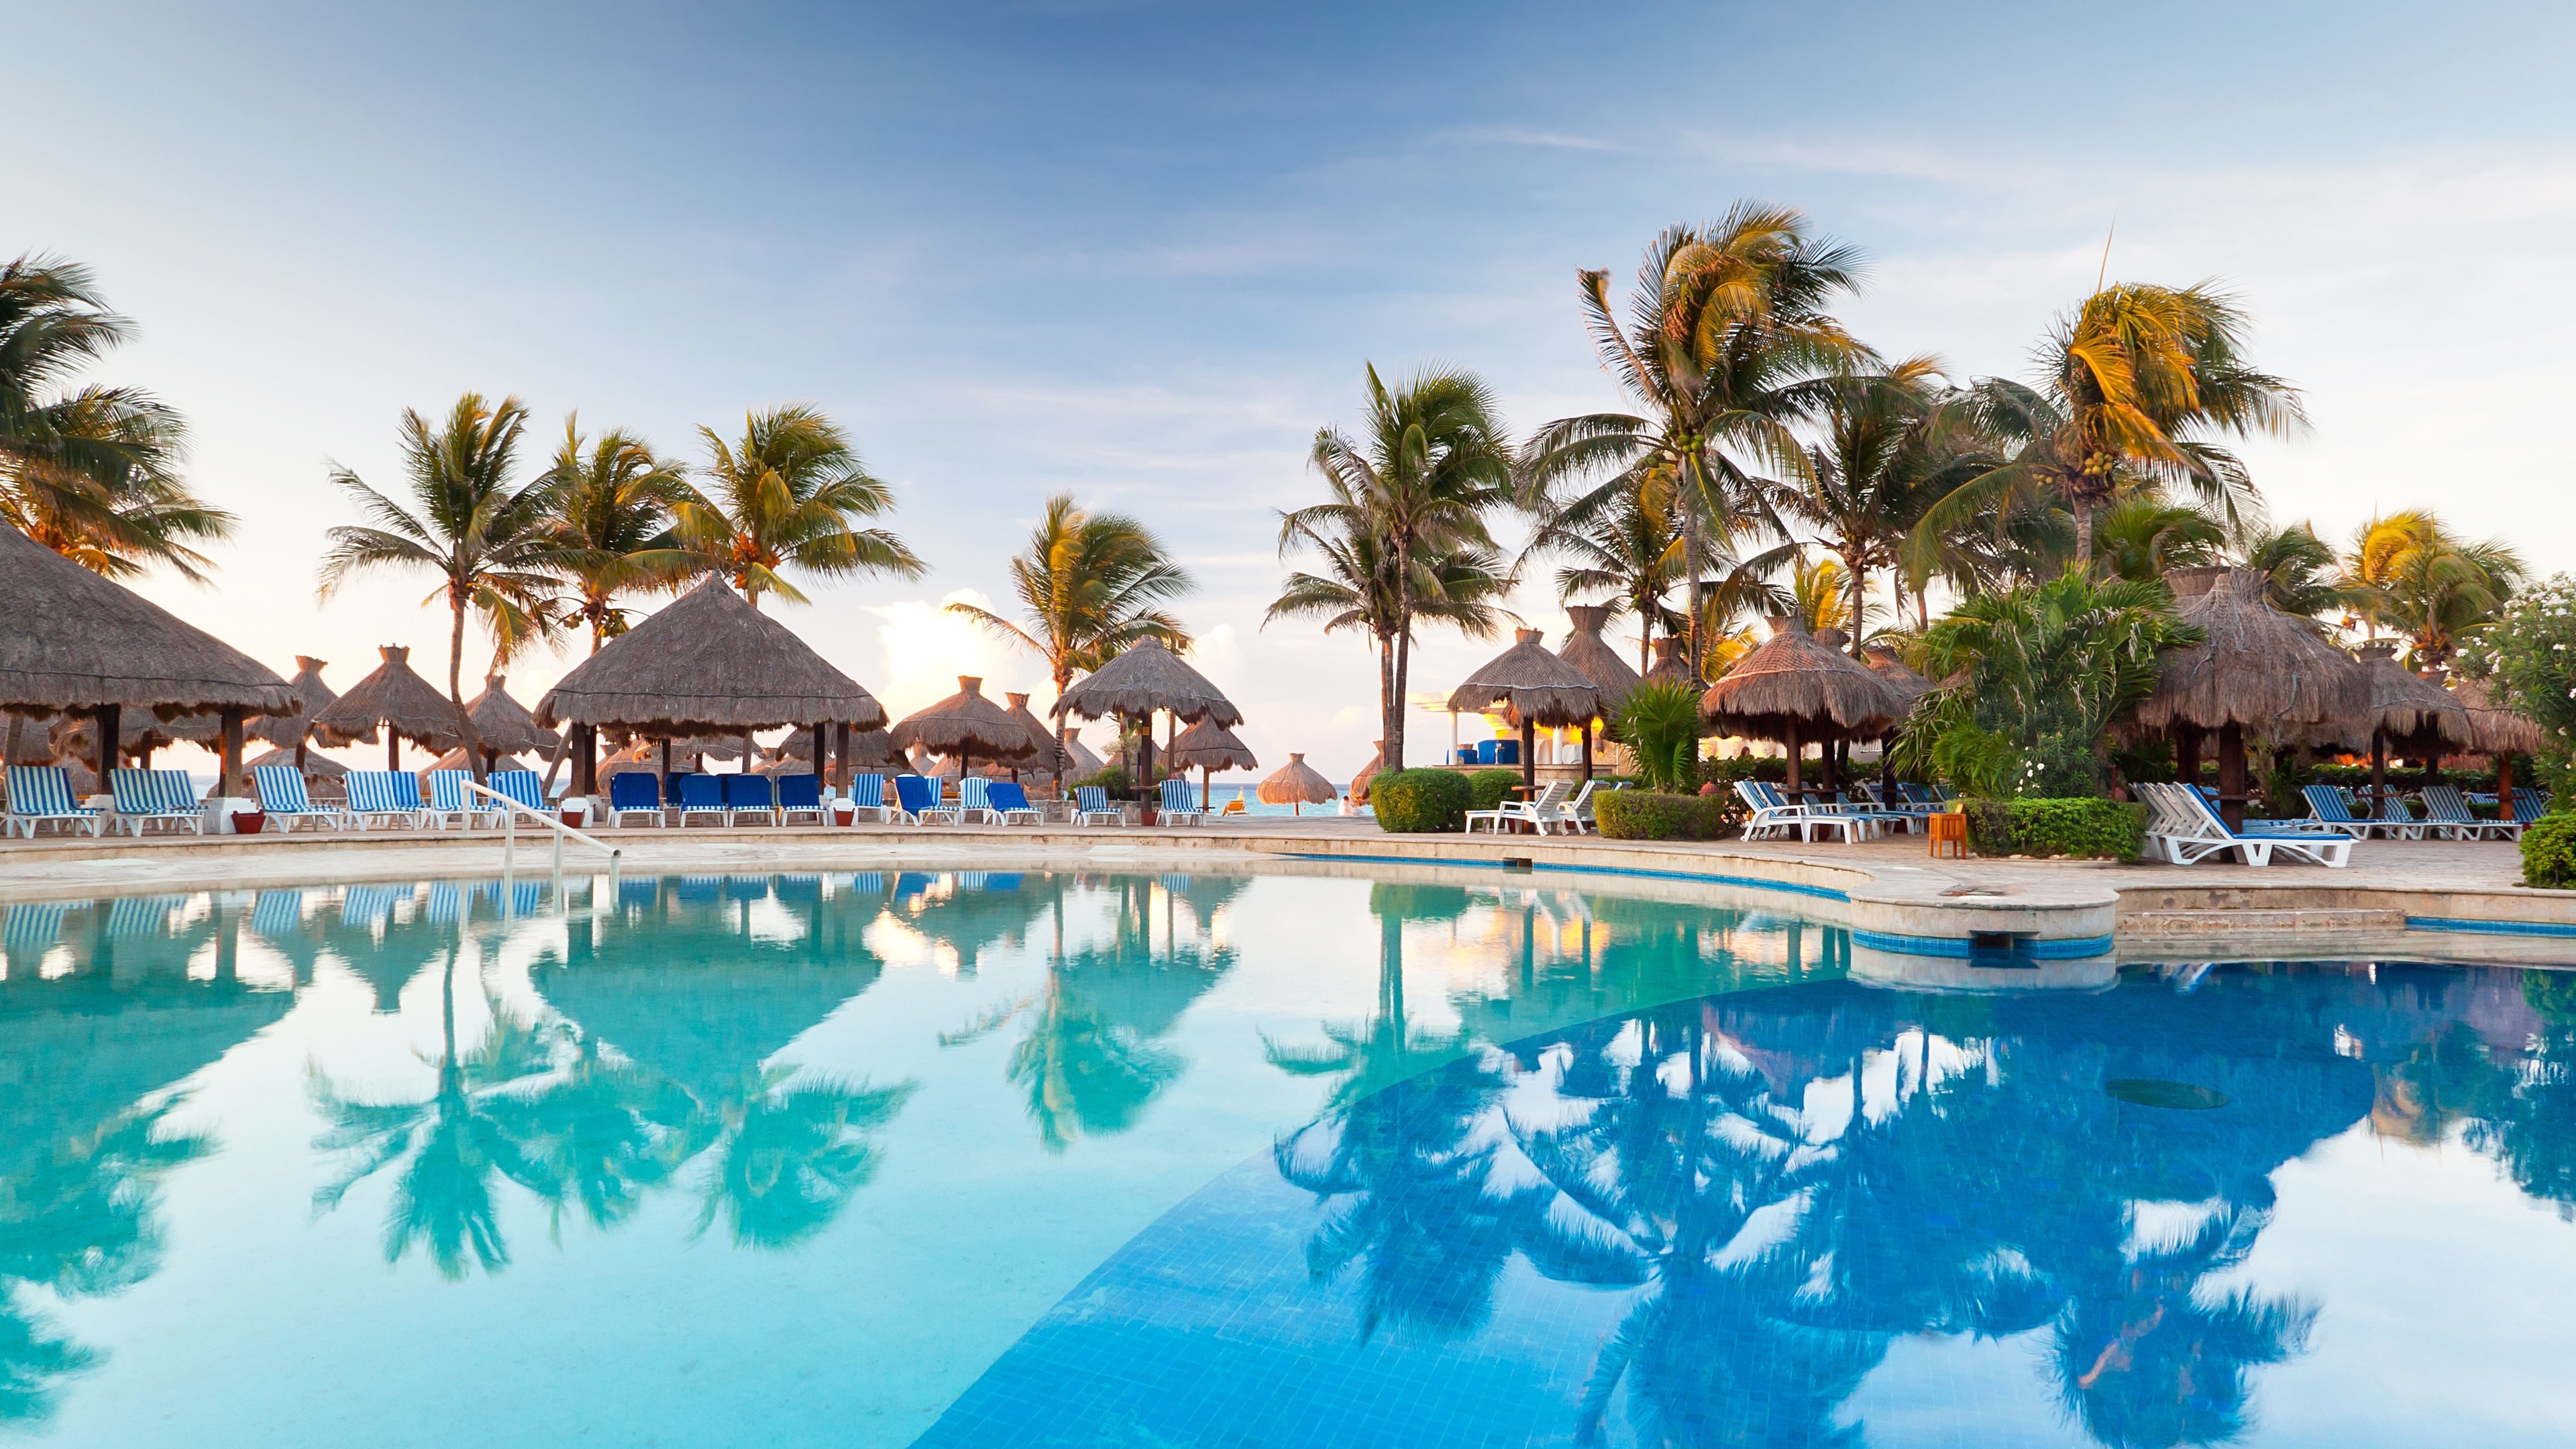 resort, photography, holiday, palm tree, reflection, tropics